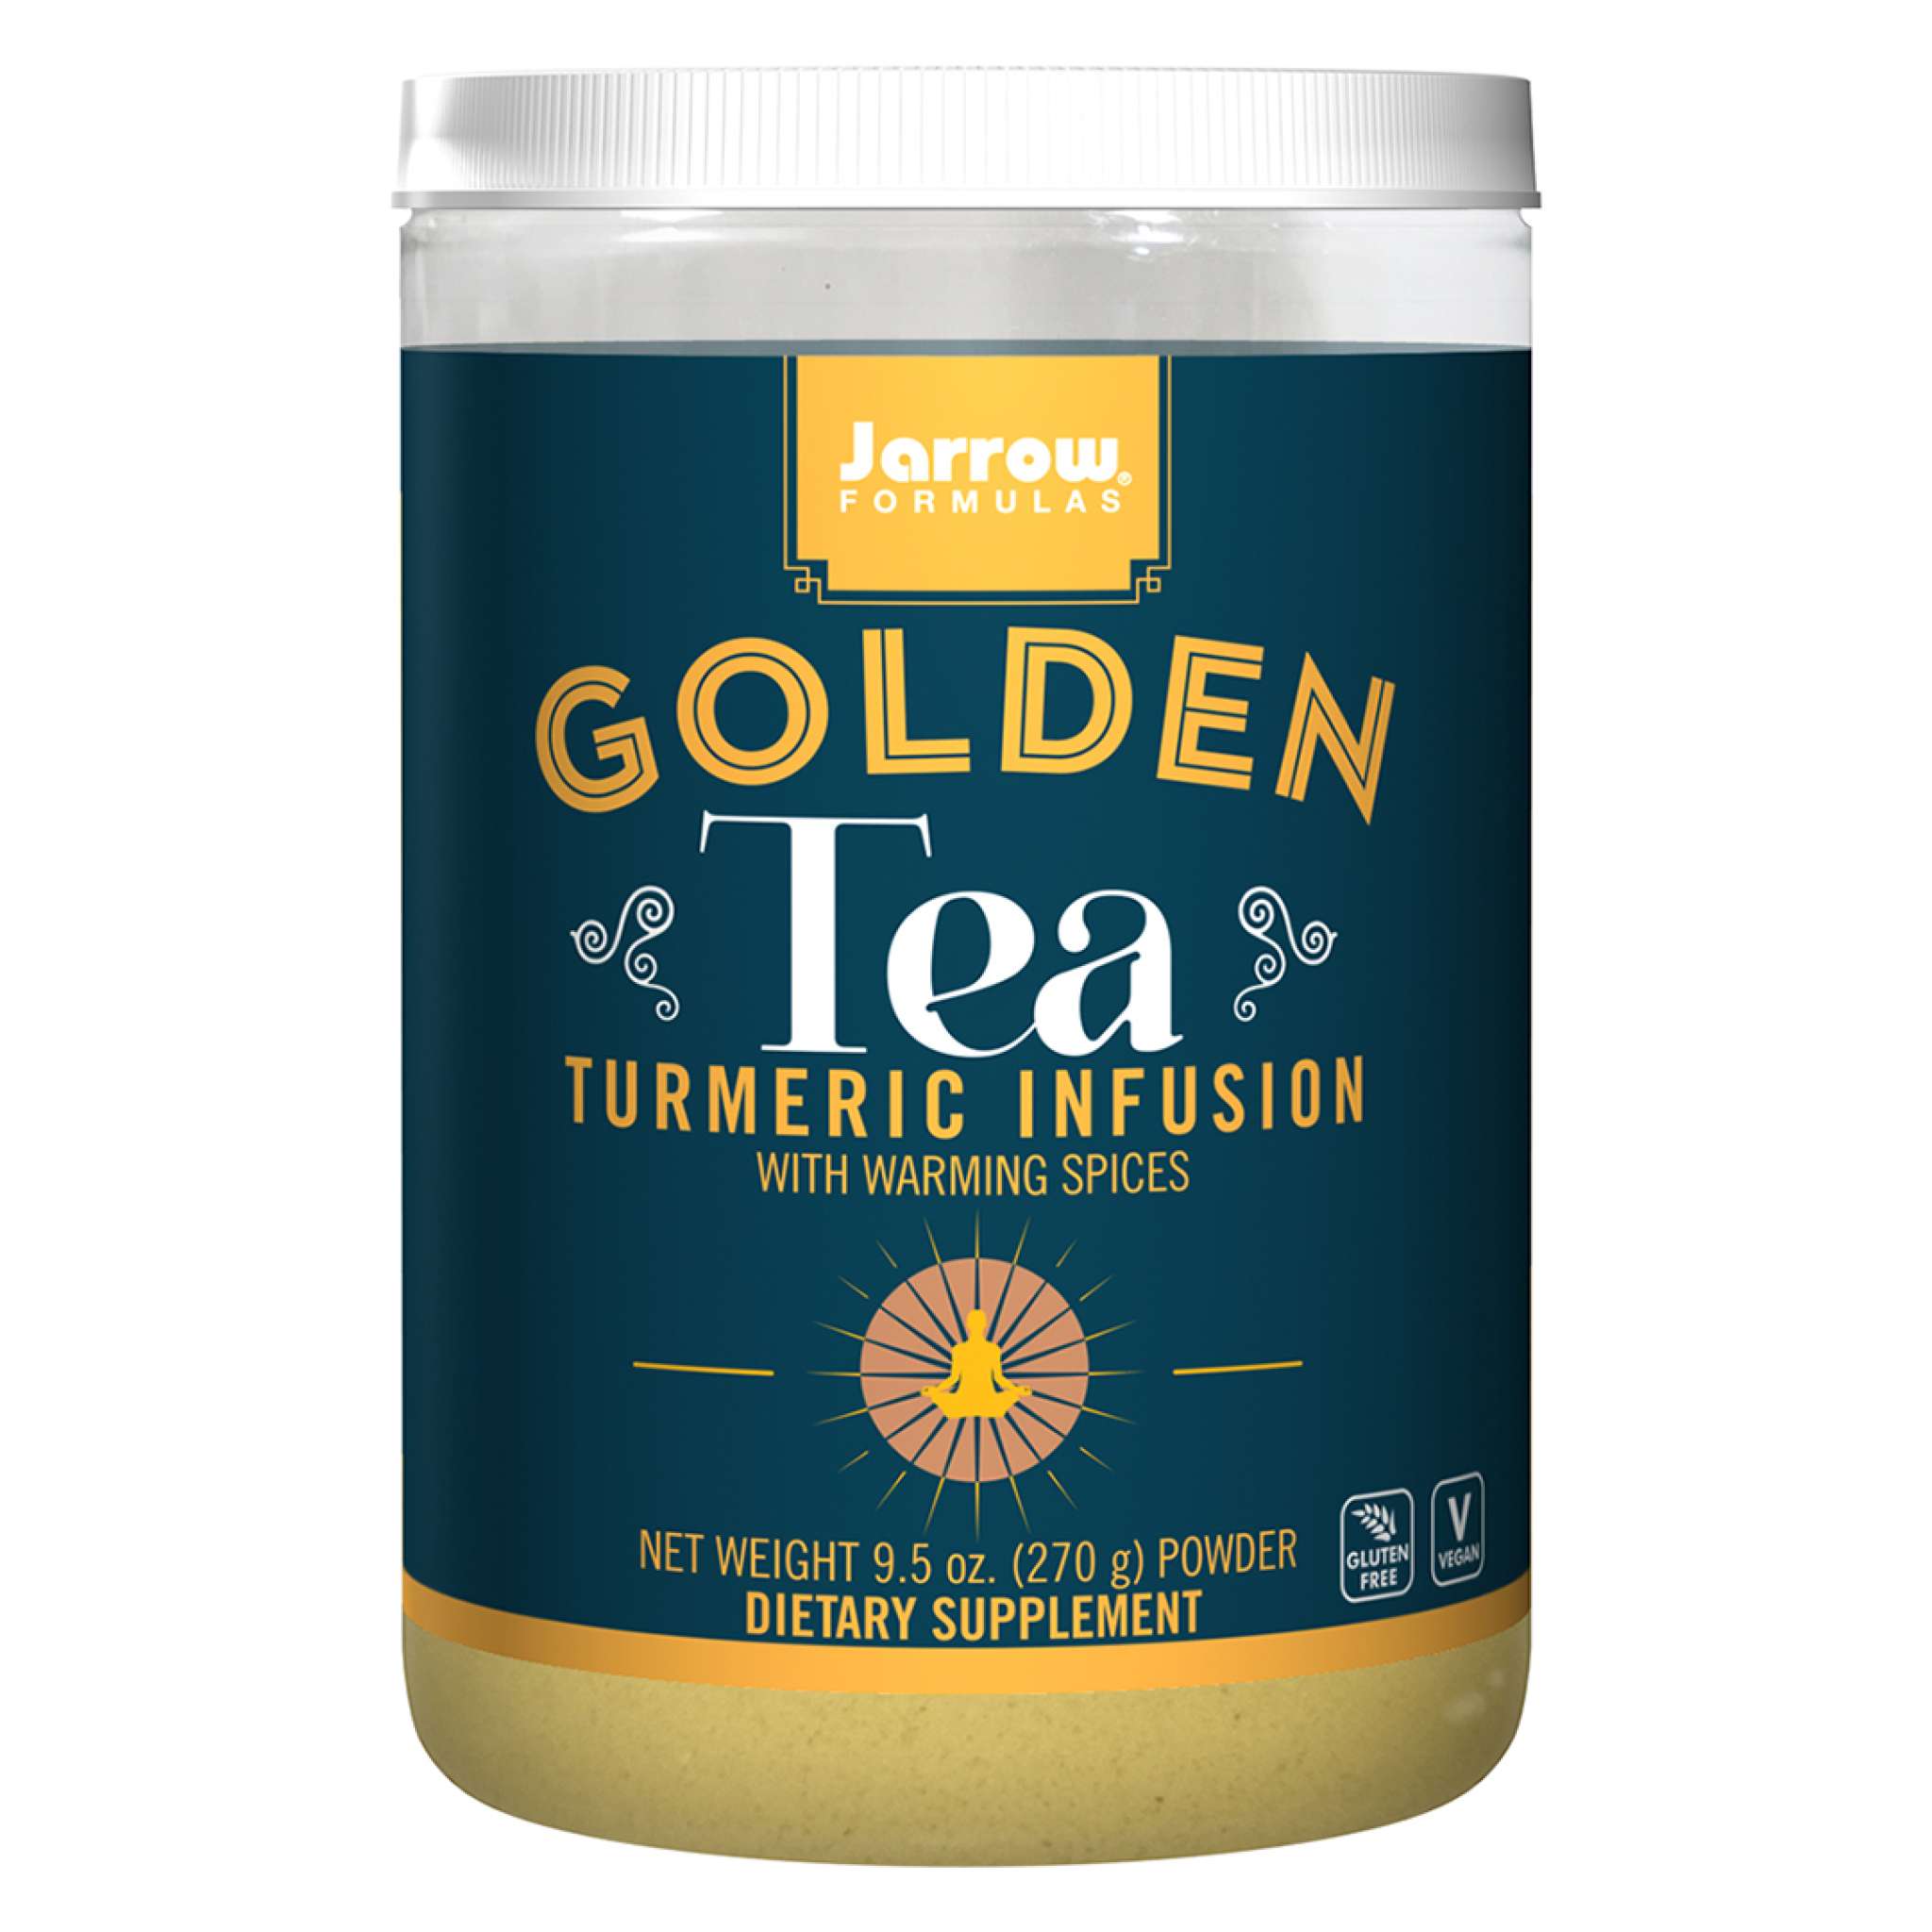 Jarrow Formulas - Golden Tea Turm Infusion powder